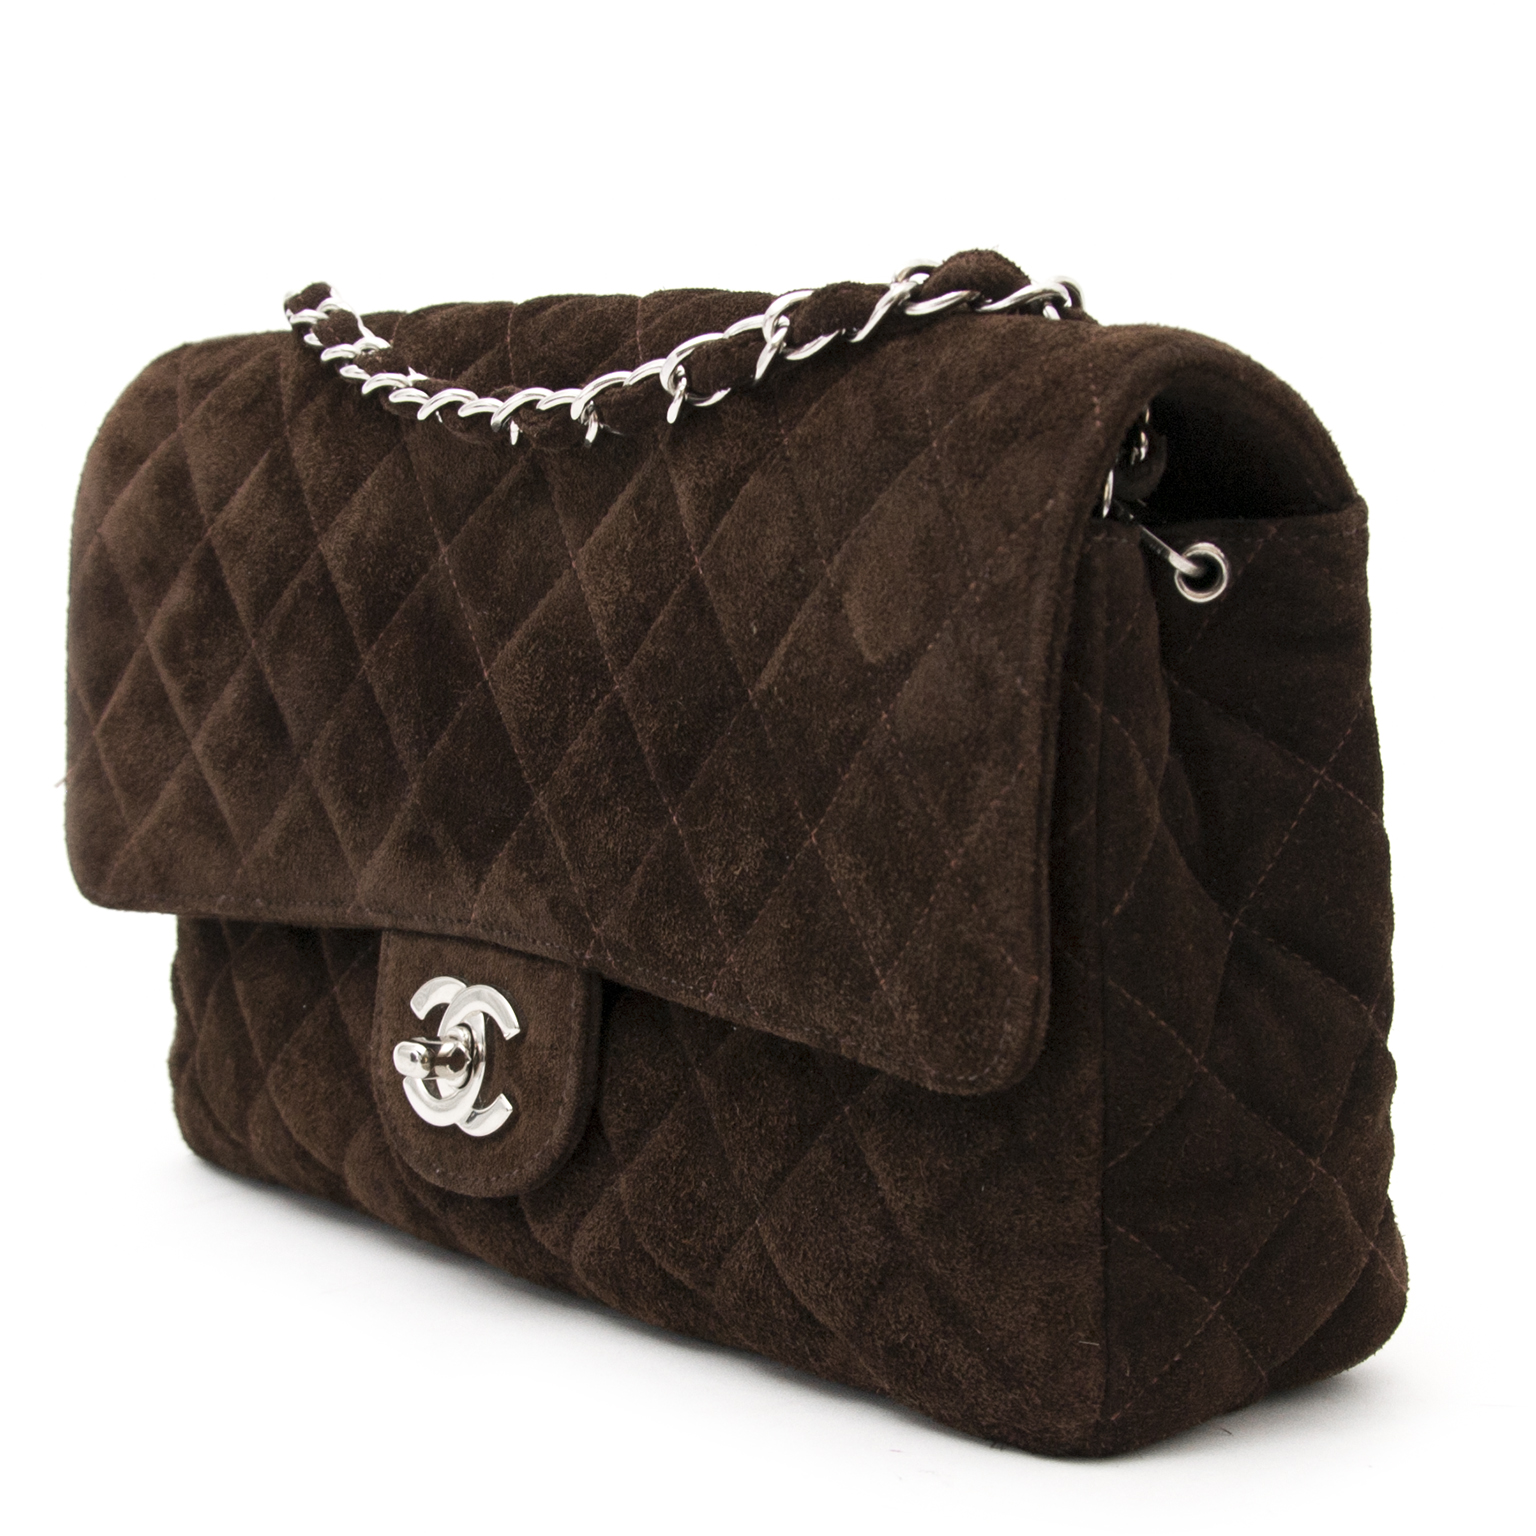 Shop safe online: authentic vintage Chanel clothes, bags, accessories. Vind tweedehands Chanel ...